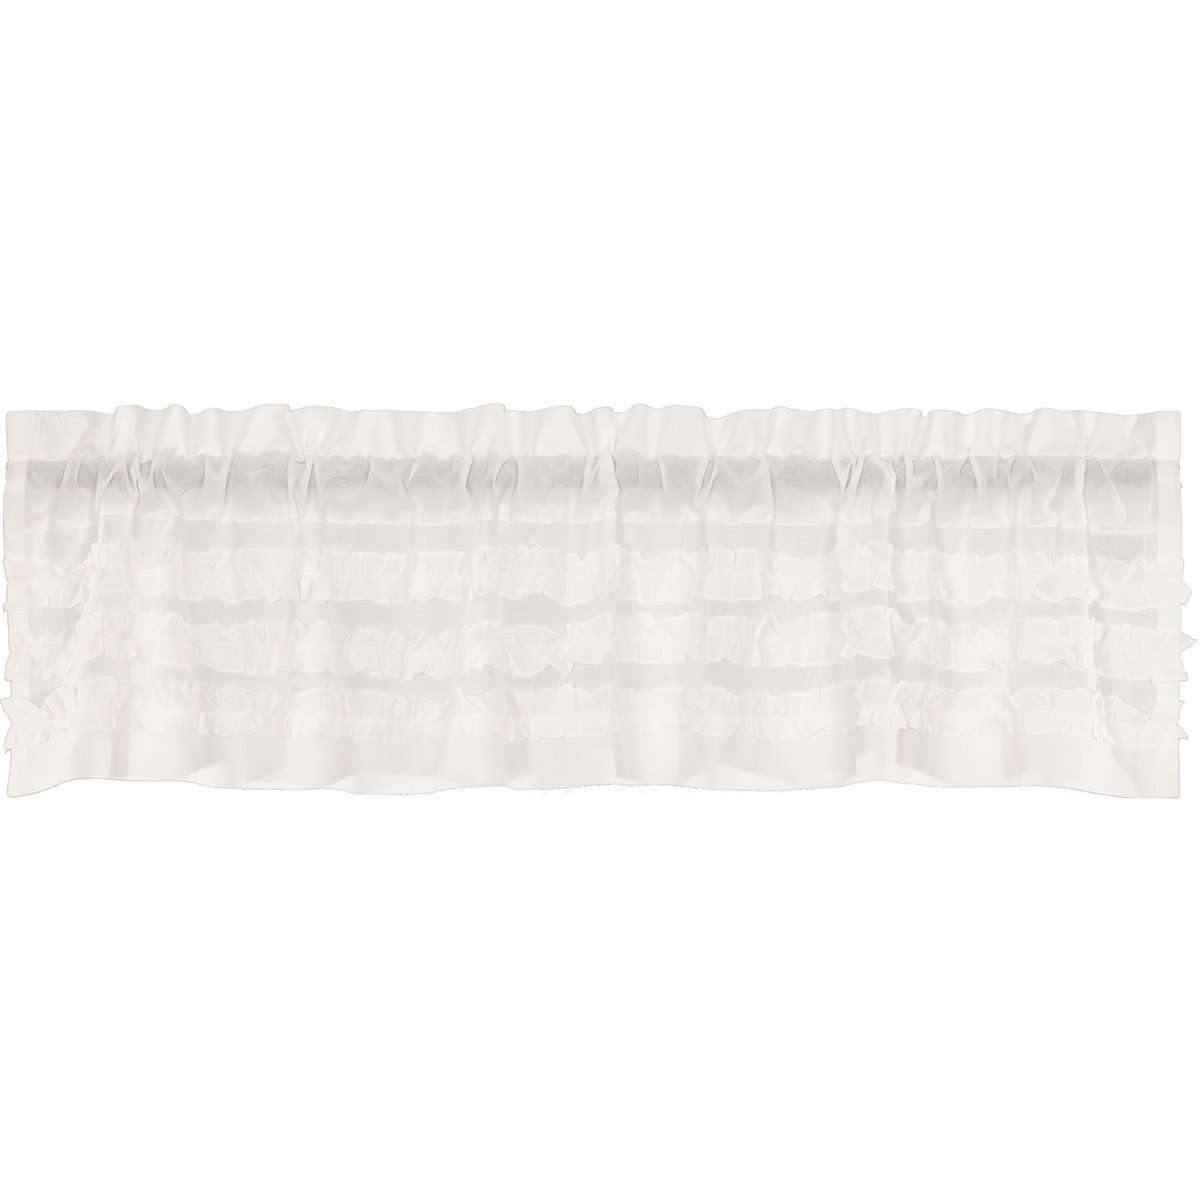 White Ruffled Sheer Petticoat Valance Curtain 16x72 VHC Brands - The Fox Decor